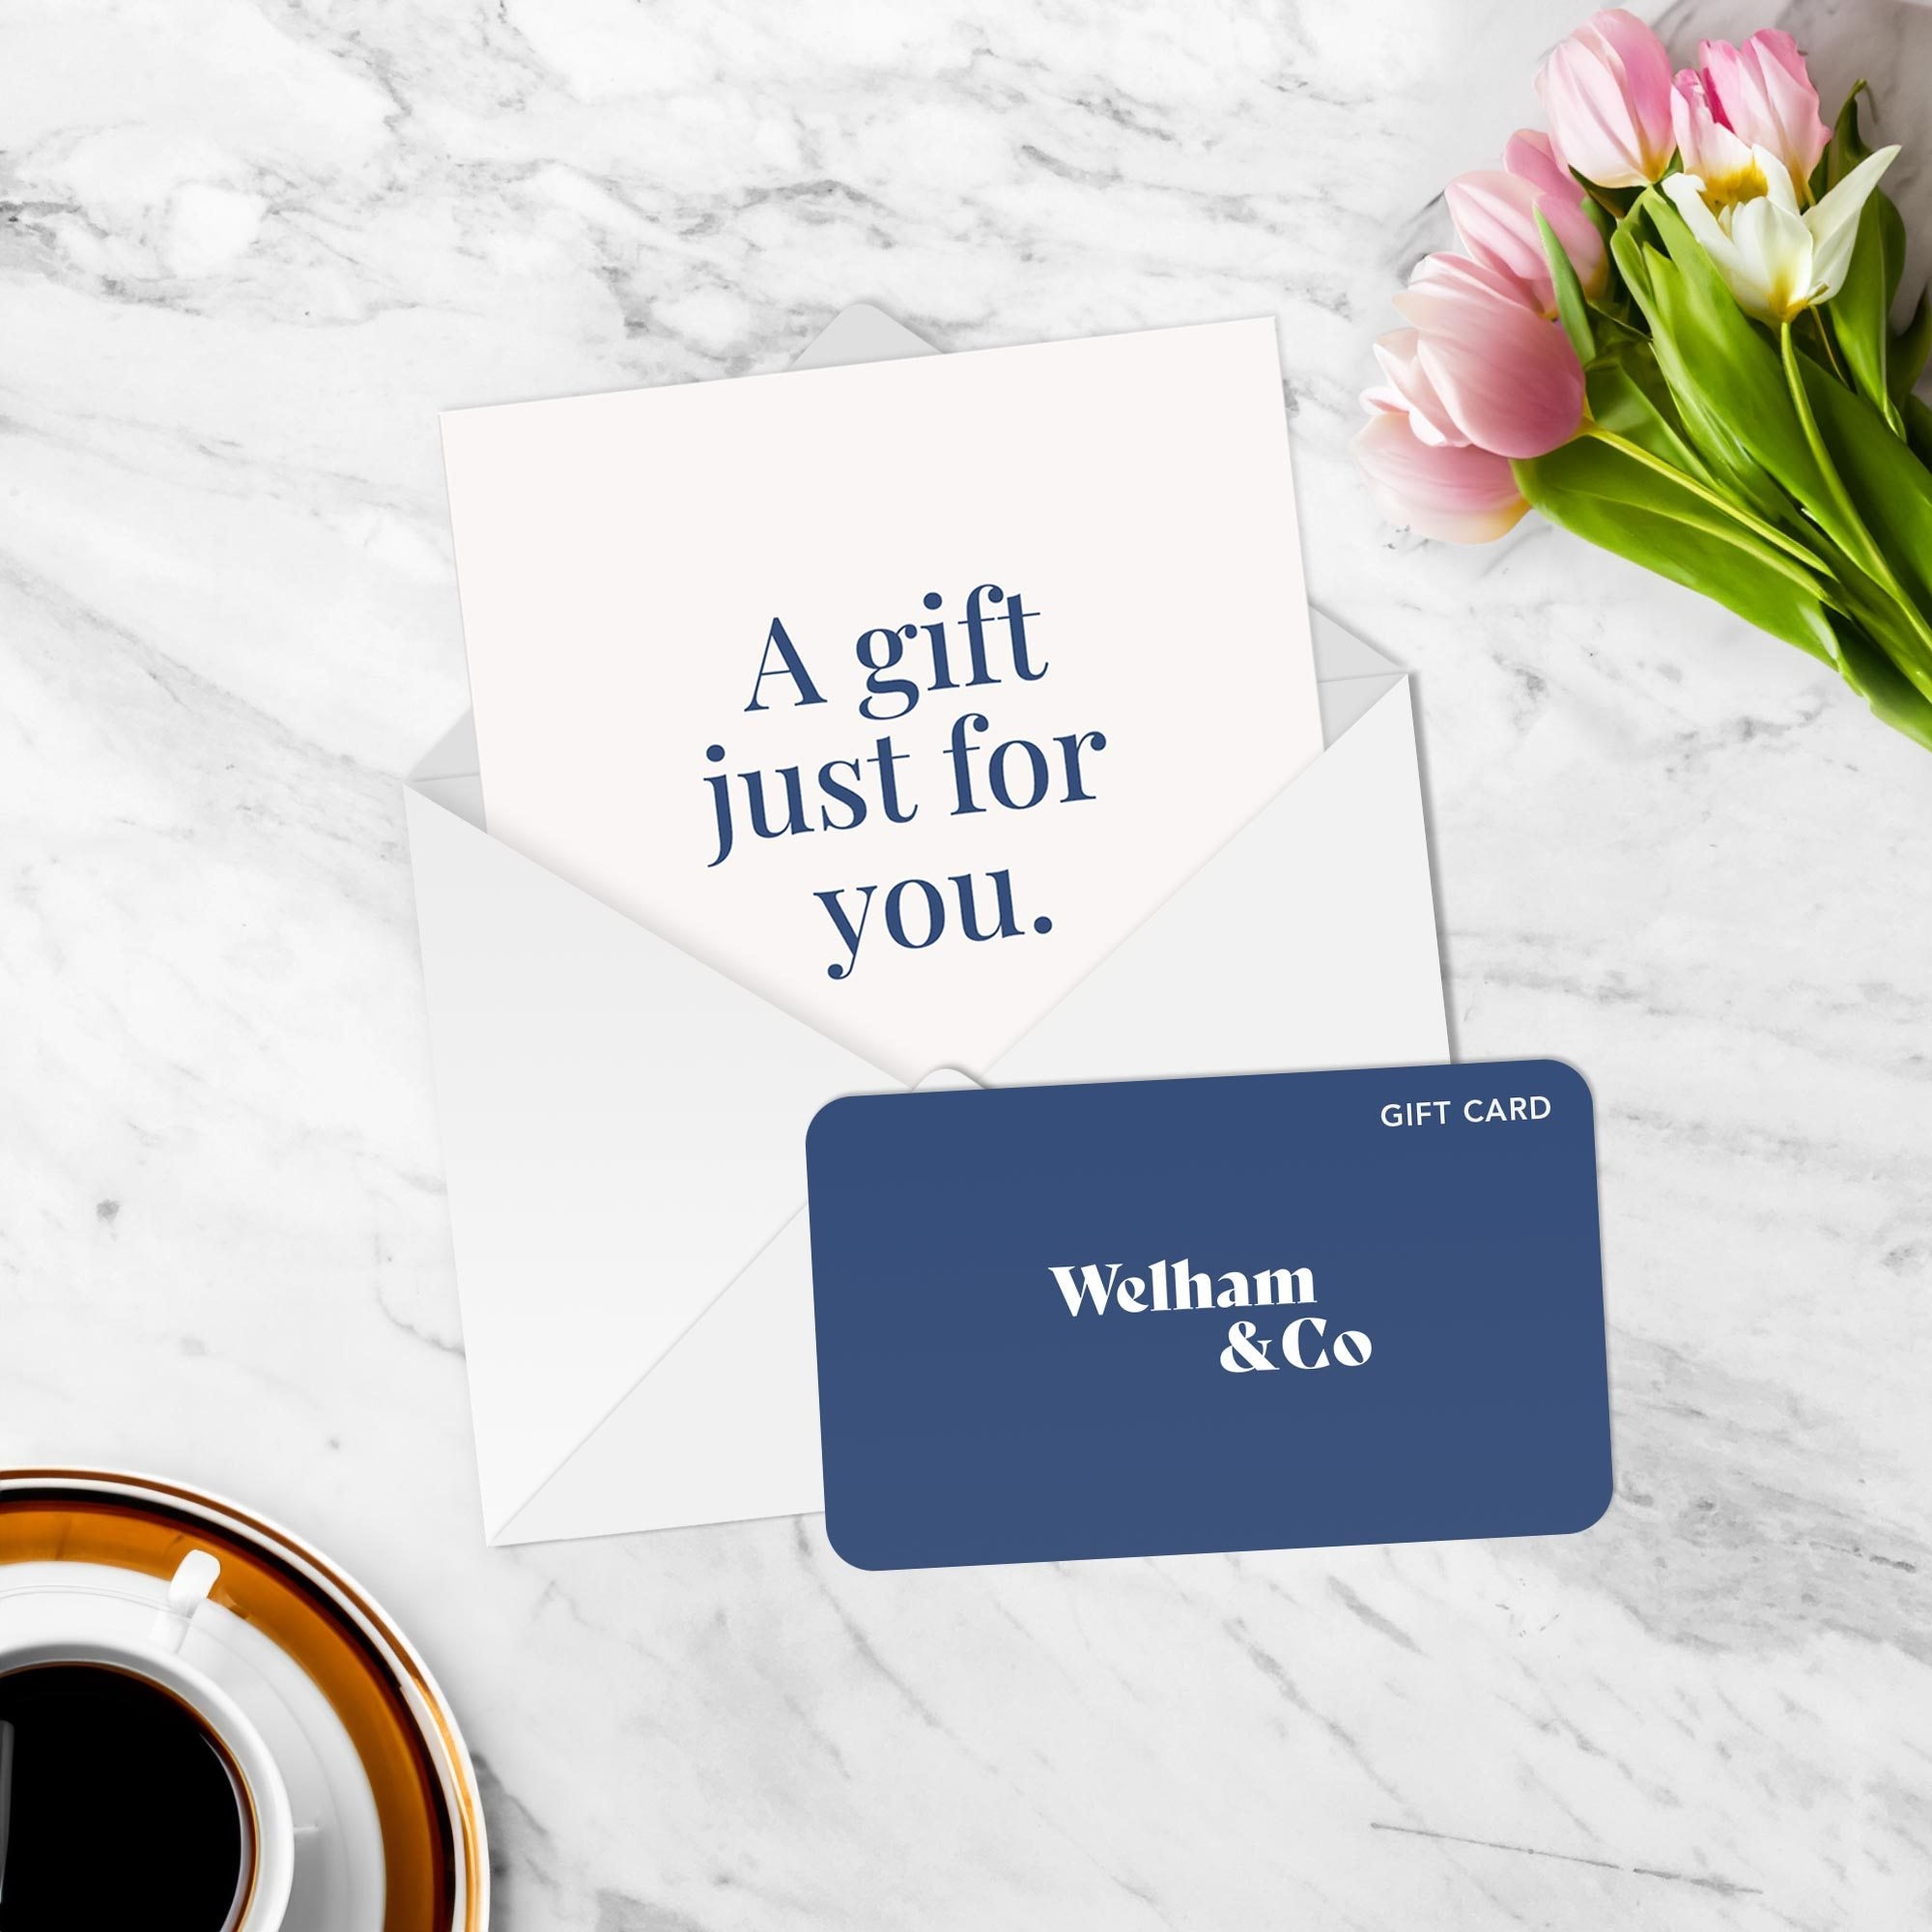 Welham & Co Gift Card